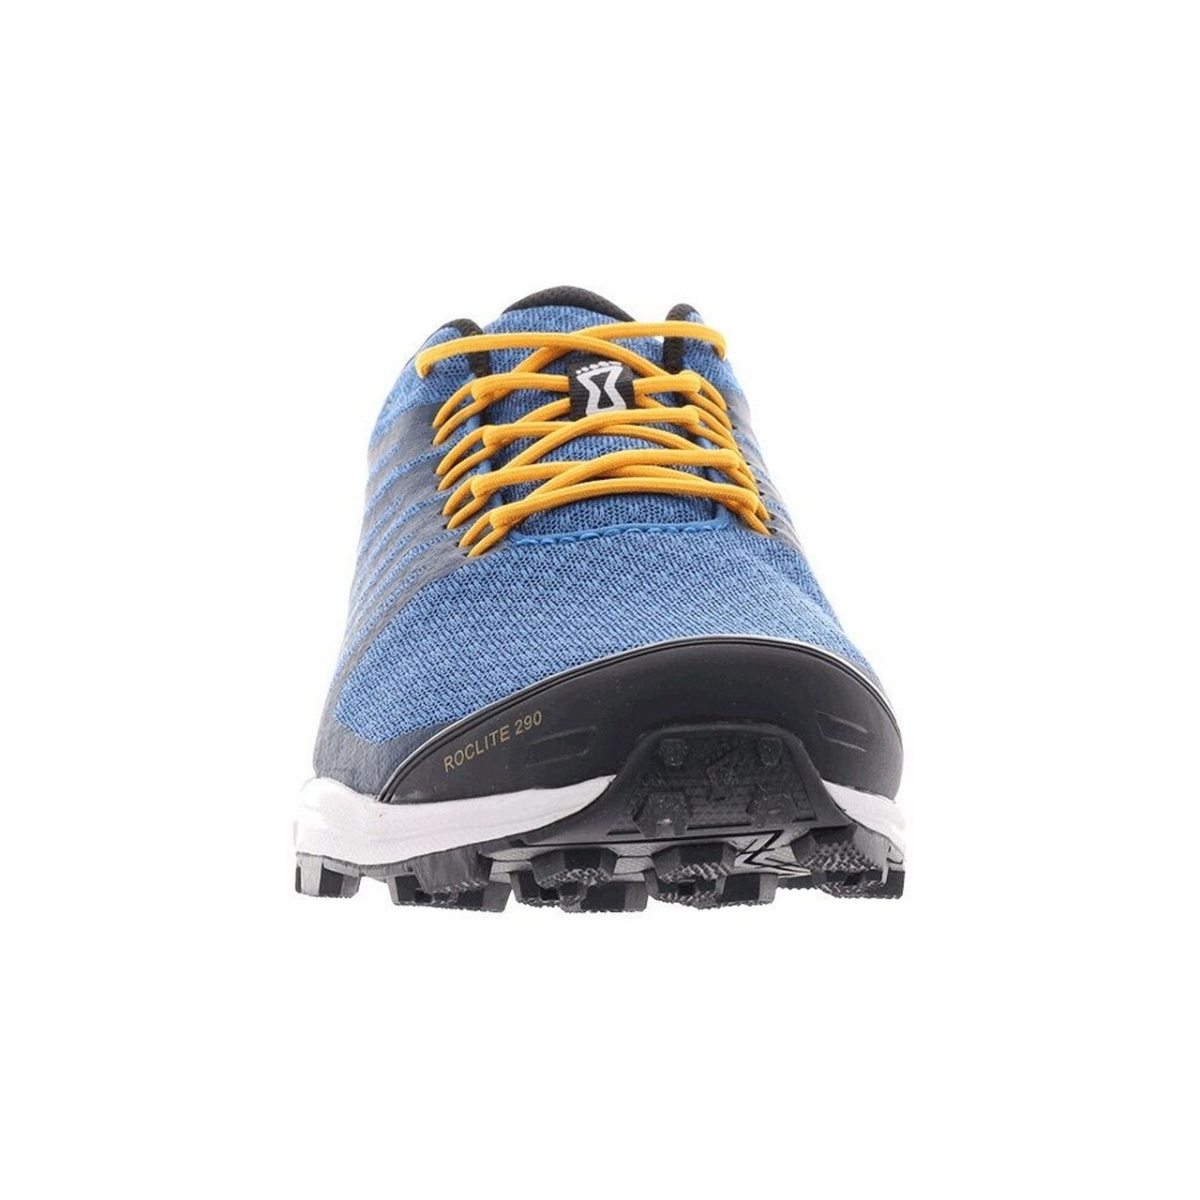 inov 8 Park Roclite G 290 blue yellow trail running shoe at Fast and Light Schweiz 6